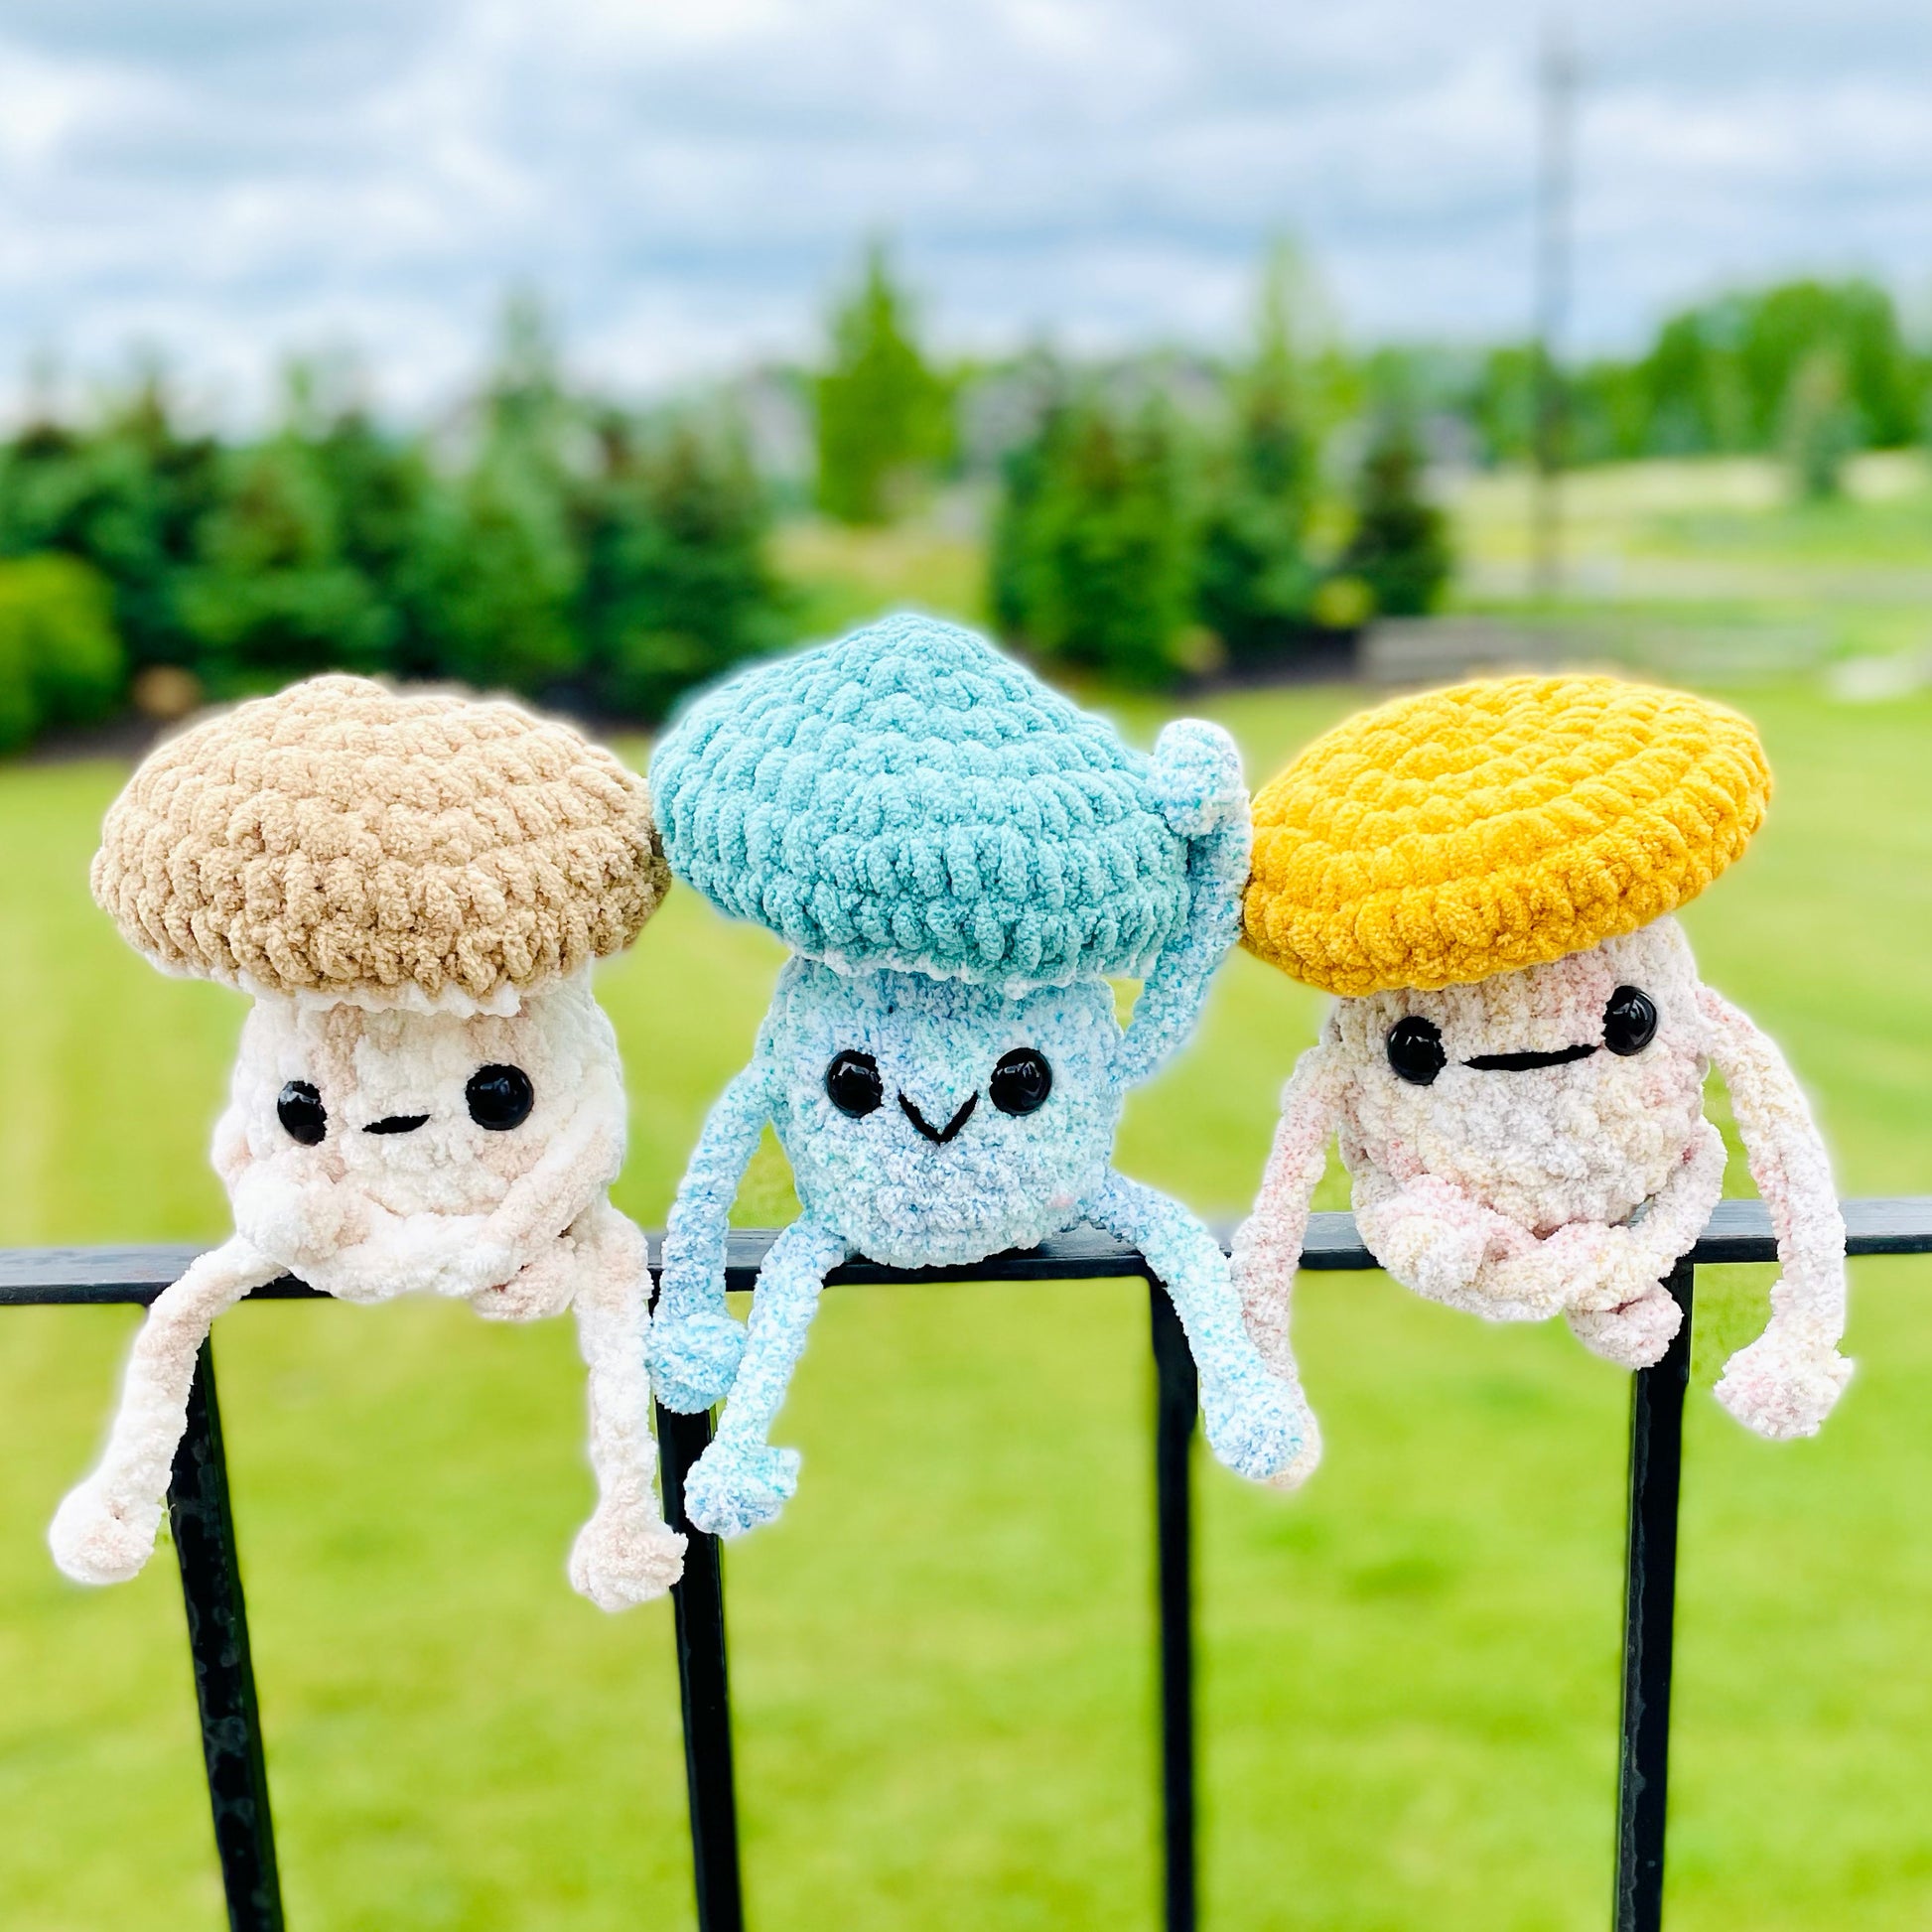 lanky crochet mushrooms